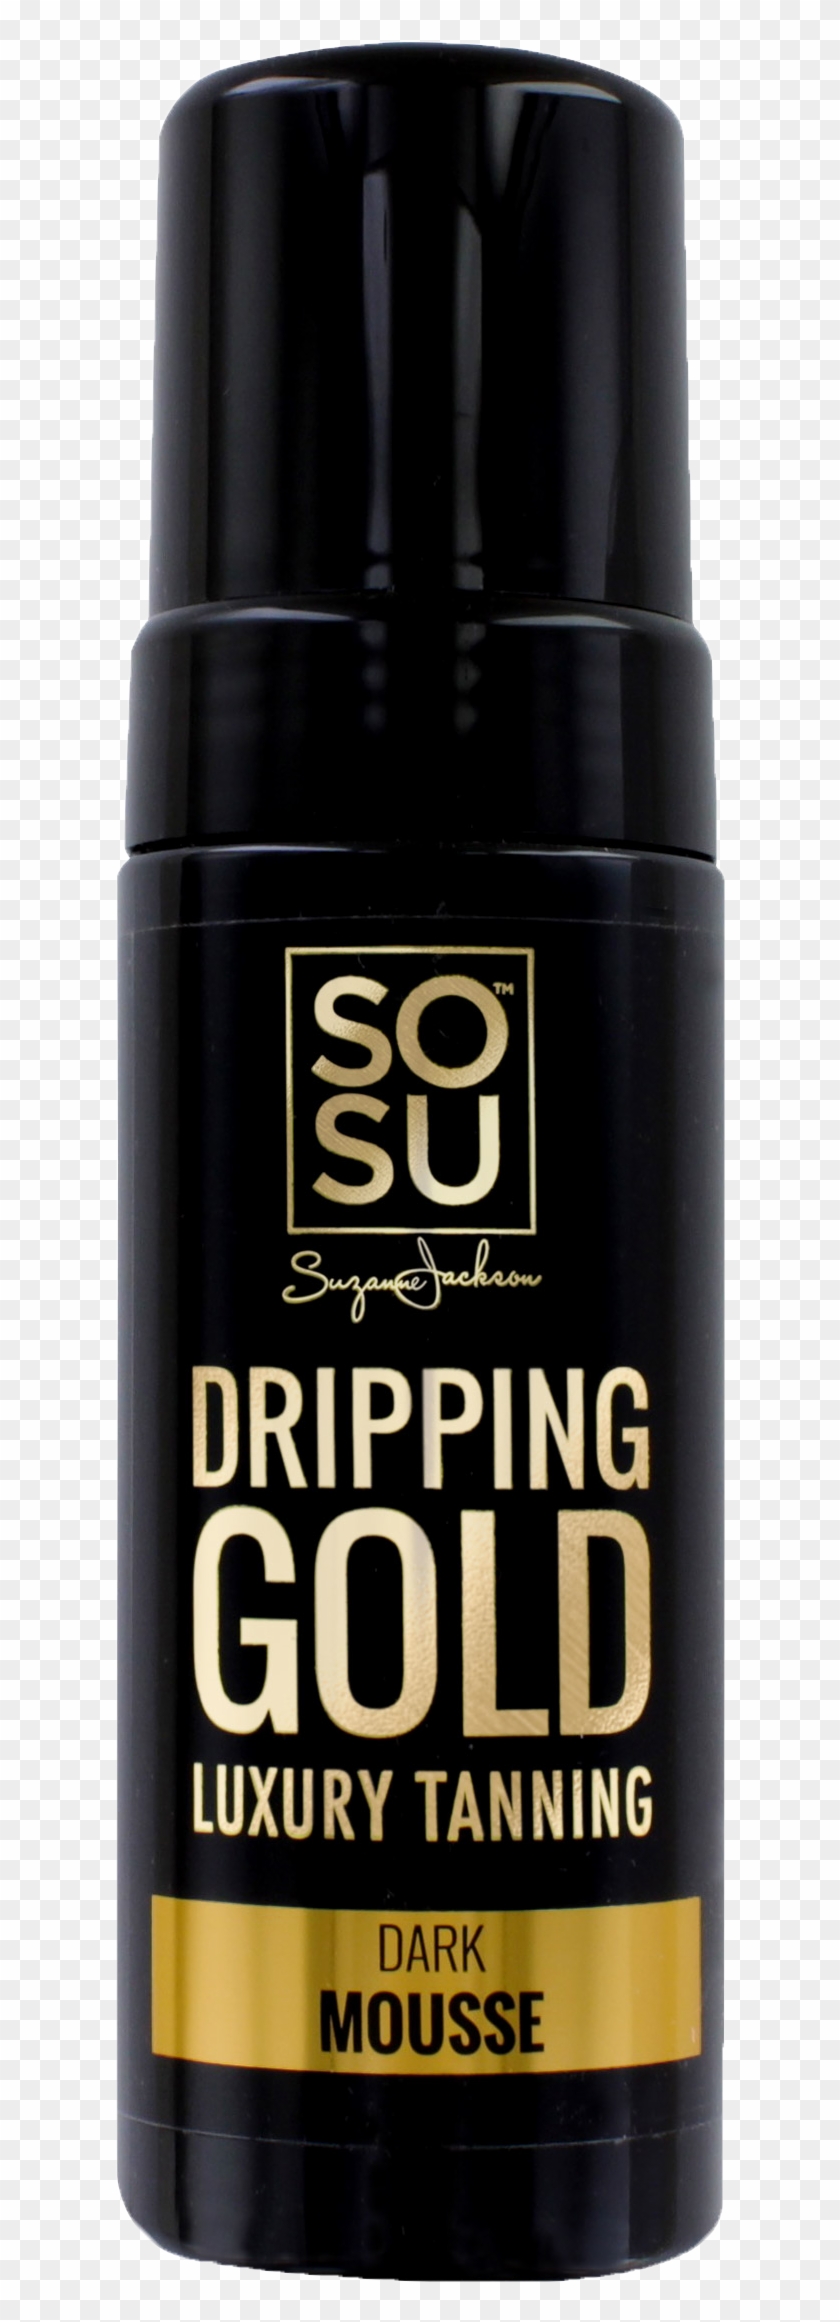 Sosu Dripping Gold, €21 Clipart #4726818